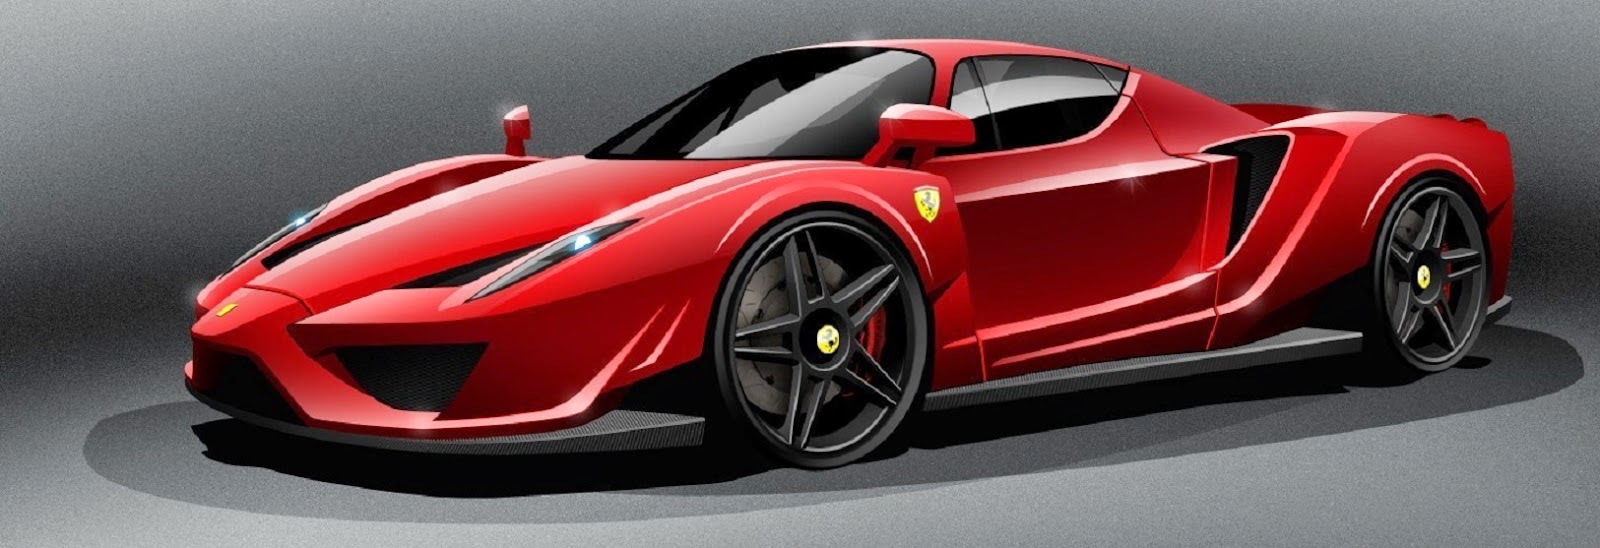 Kumpulan Modifikasi Mobil  Ferrari  Enzo Terbaru Modifotto